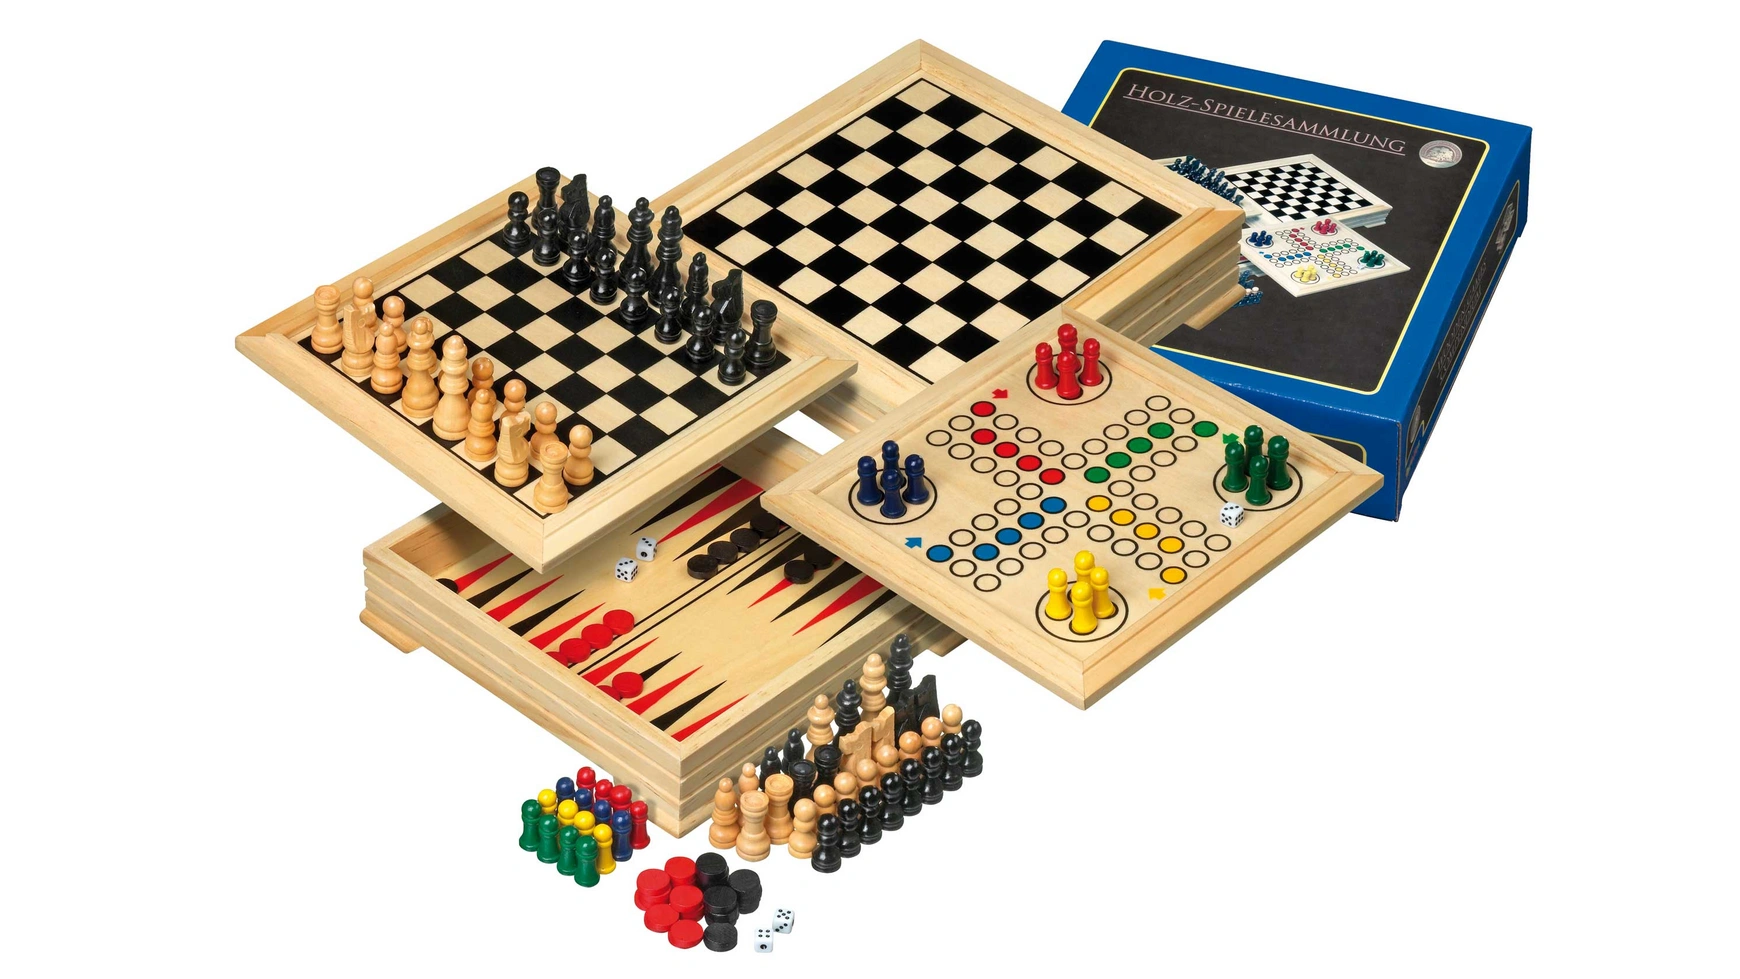 Коллекция деревянных игр, travel 3104 Philos-Spiele шахматы нарды шашки резные королевские